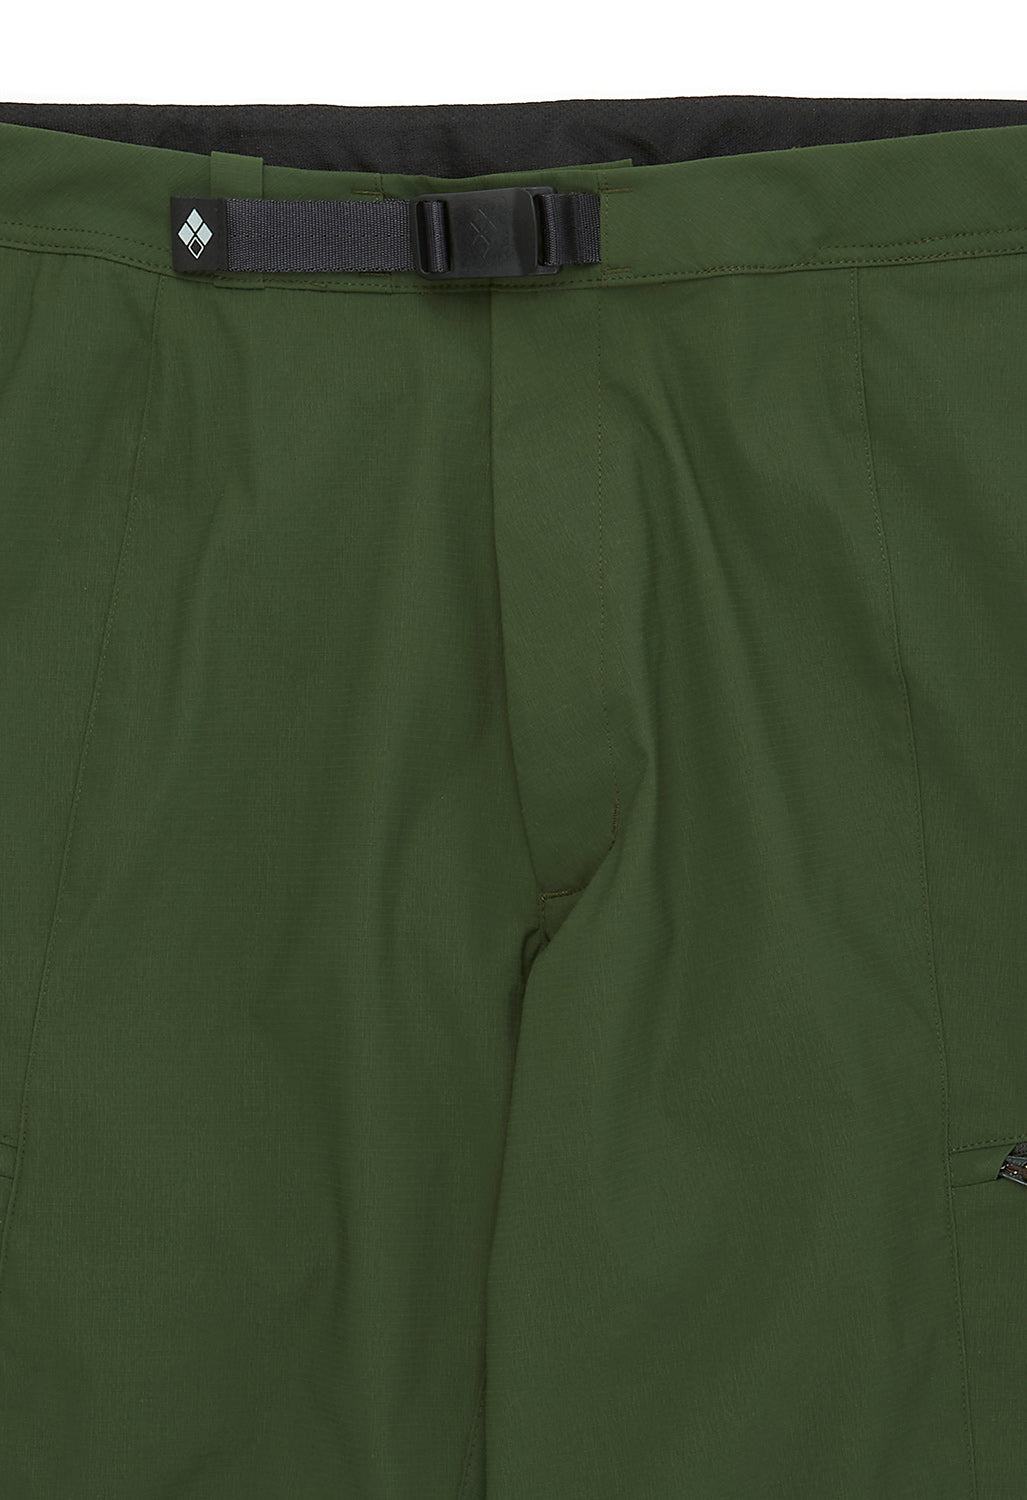 Montbell Men's South Rim Shorts - Khaki Green